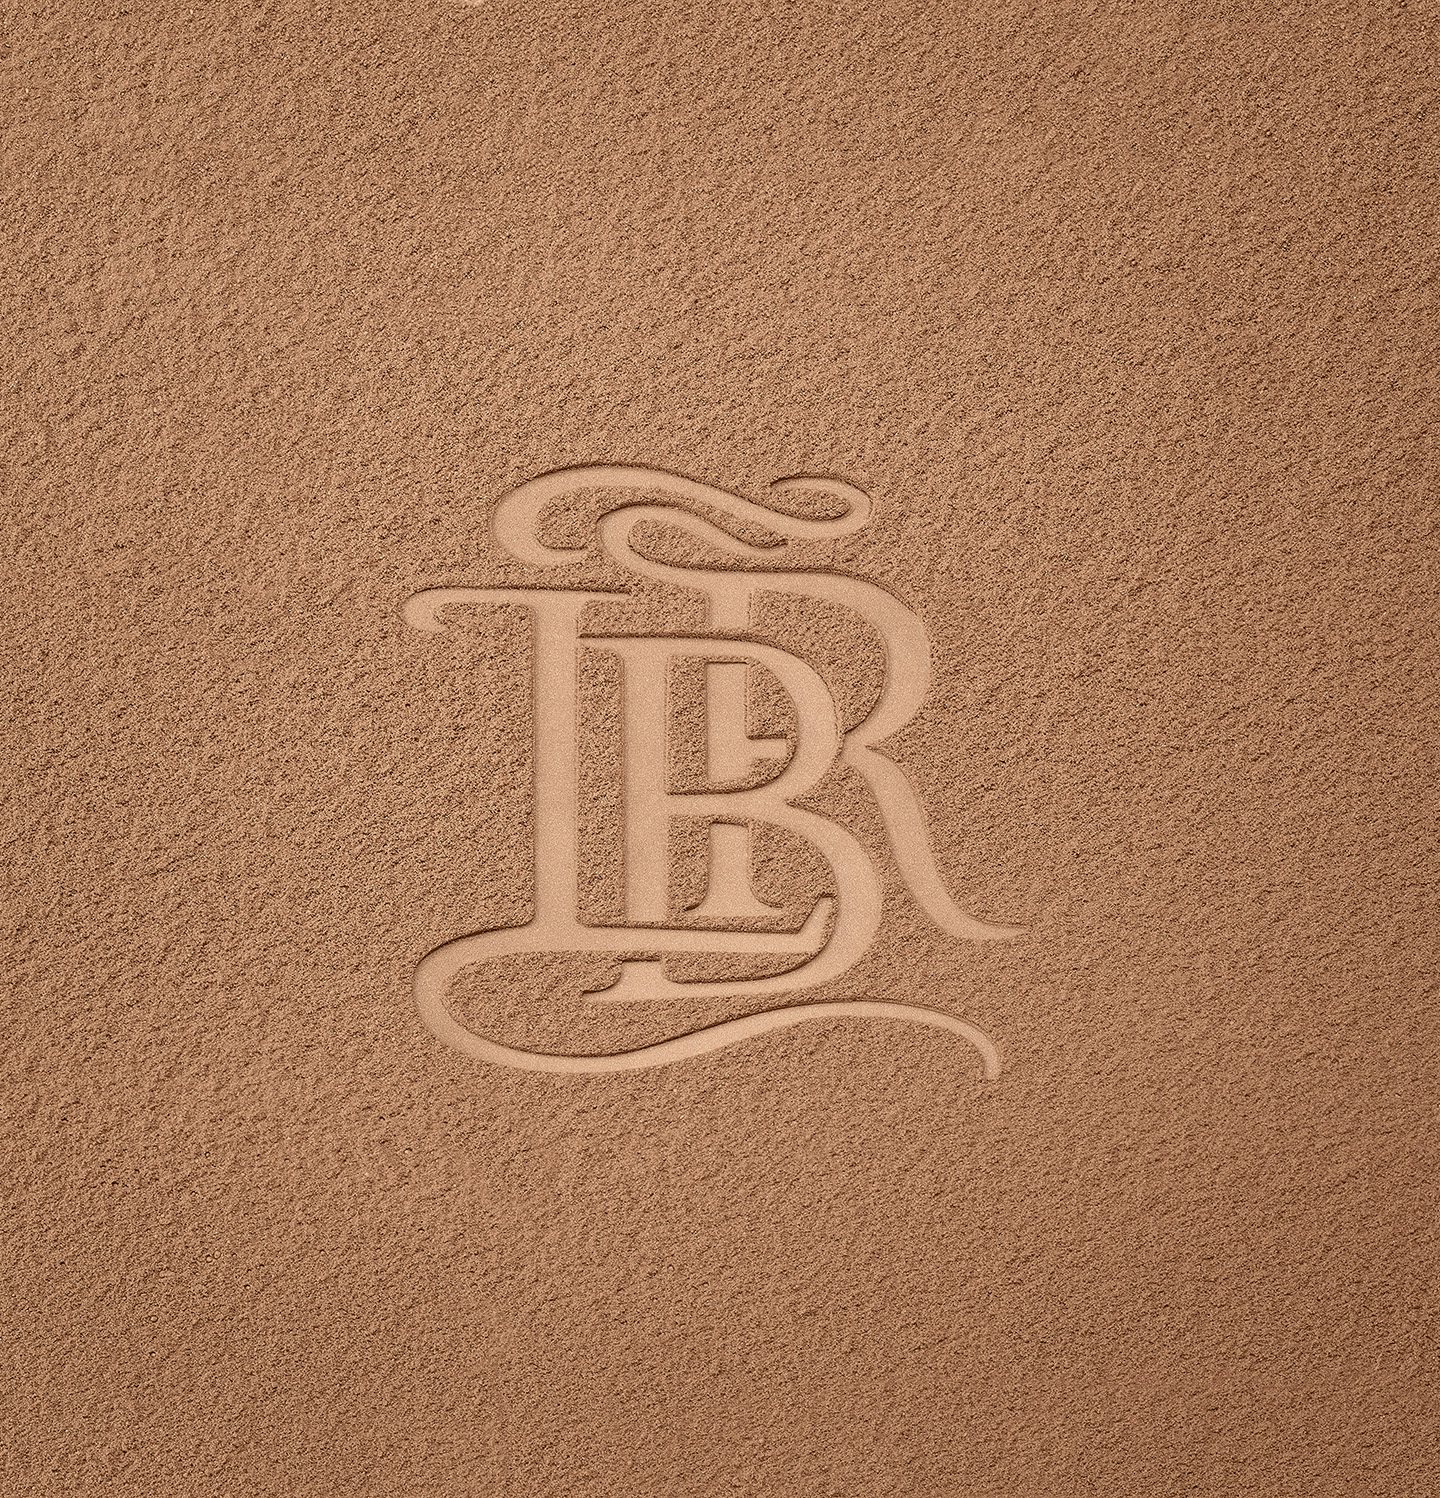 La bouche rouge La Terre Intense bronzer swatch with logo